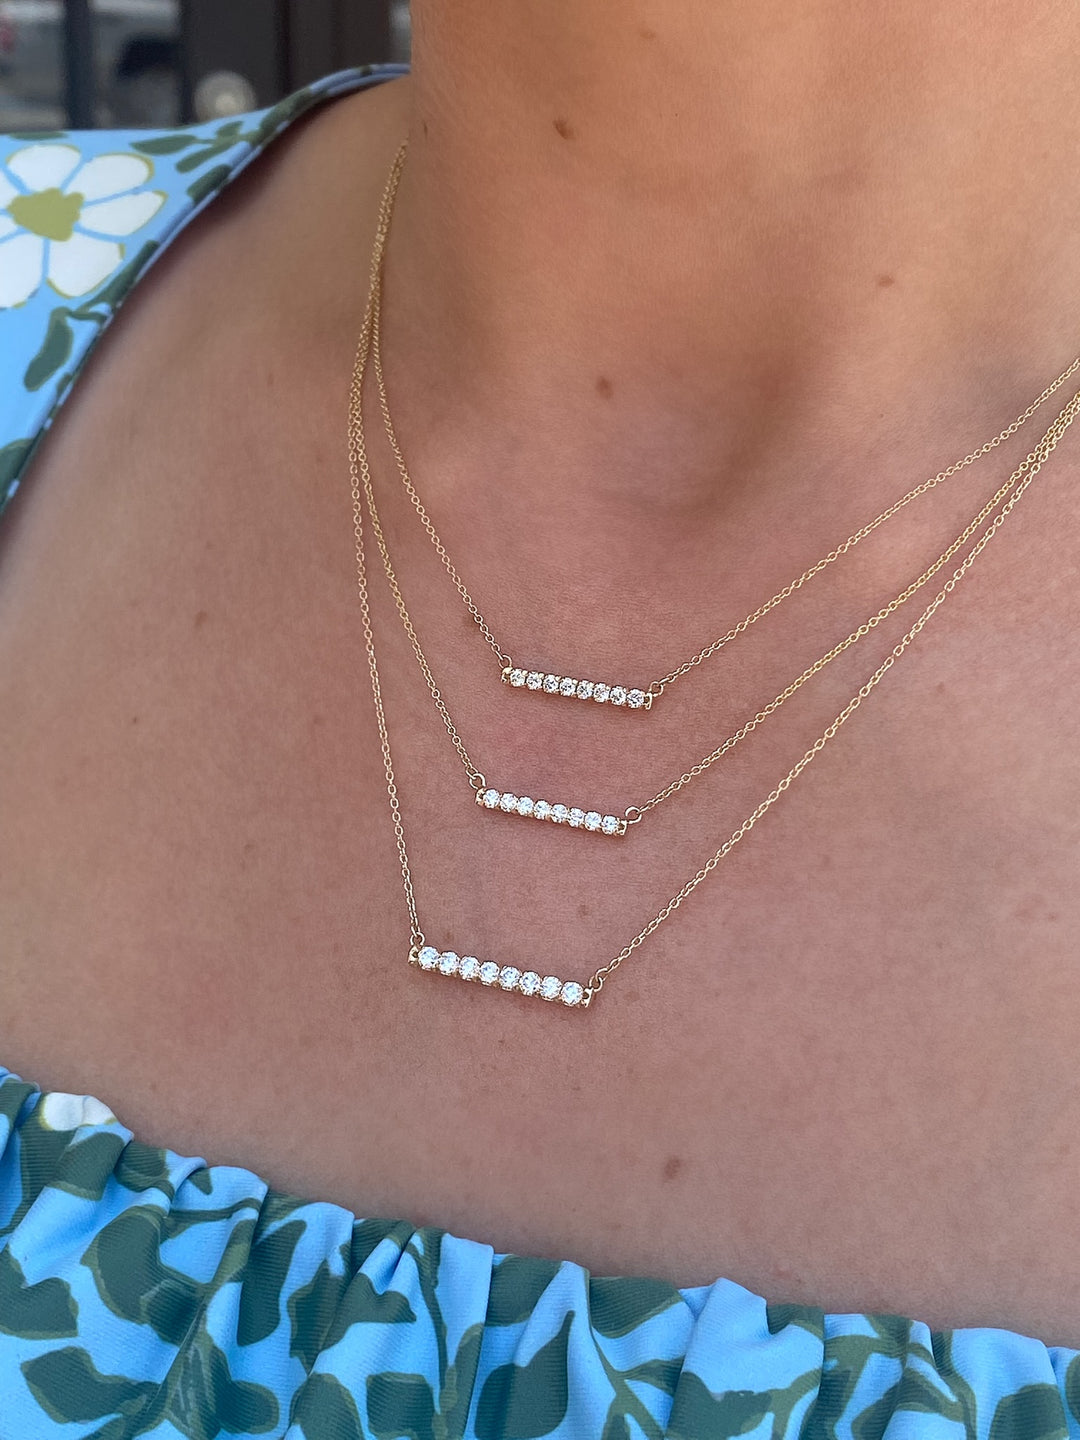 14K French-Set Diamond Bar Necklace